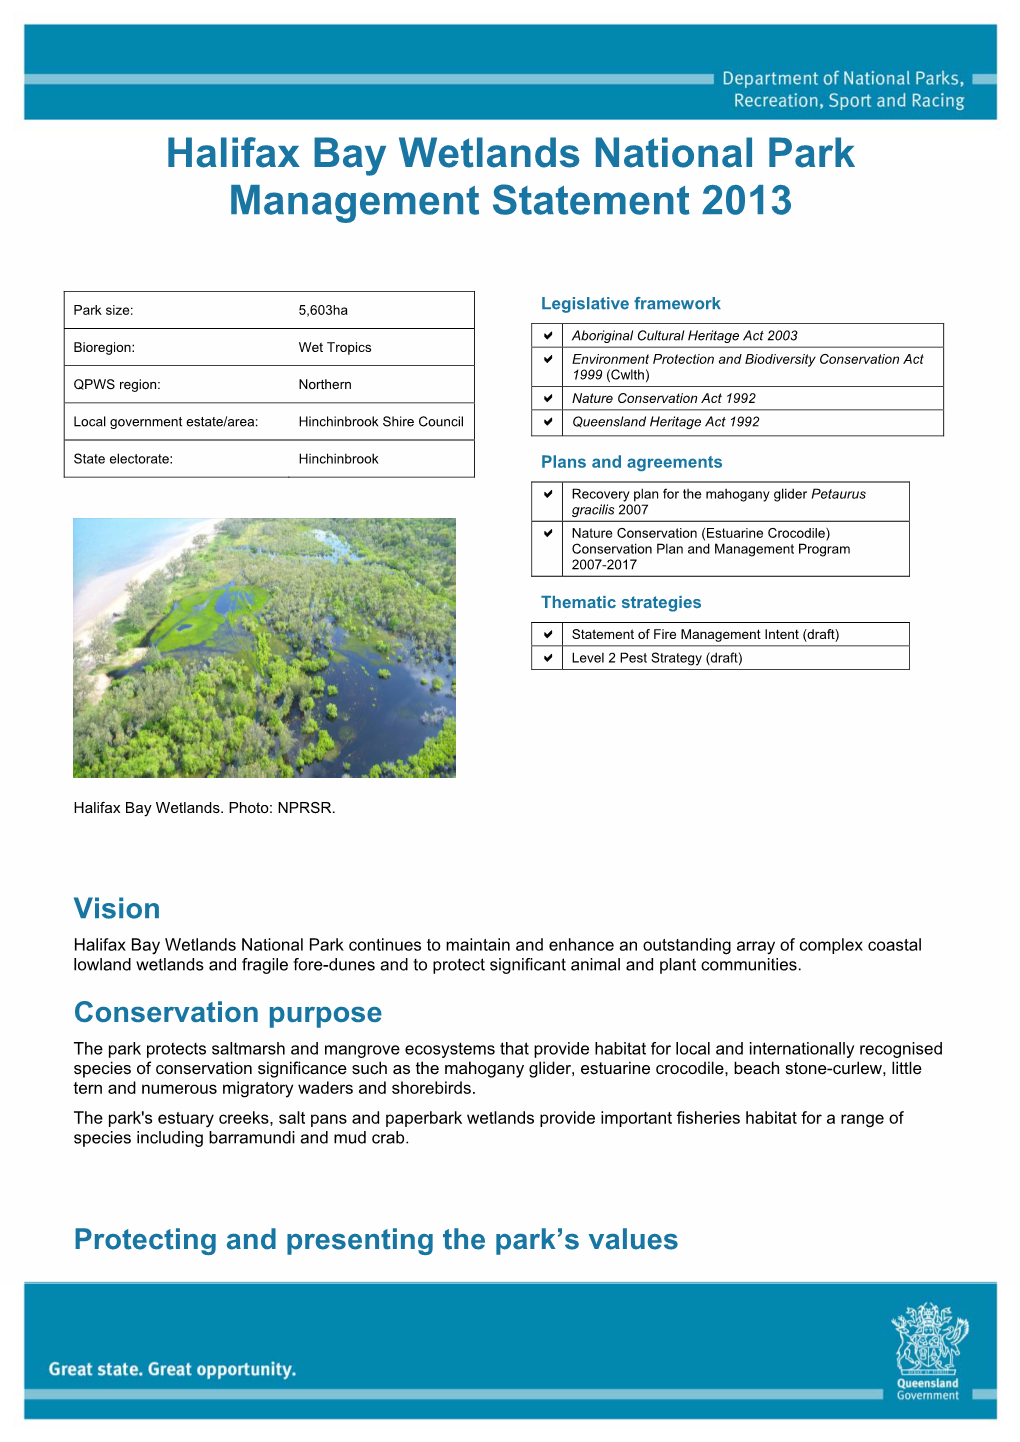 Halifax Bay Wetlands National Park Management Statement 2013